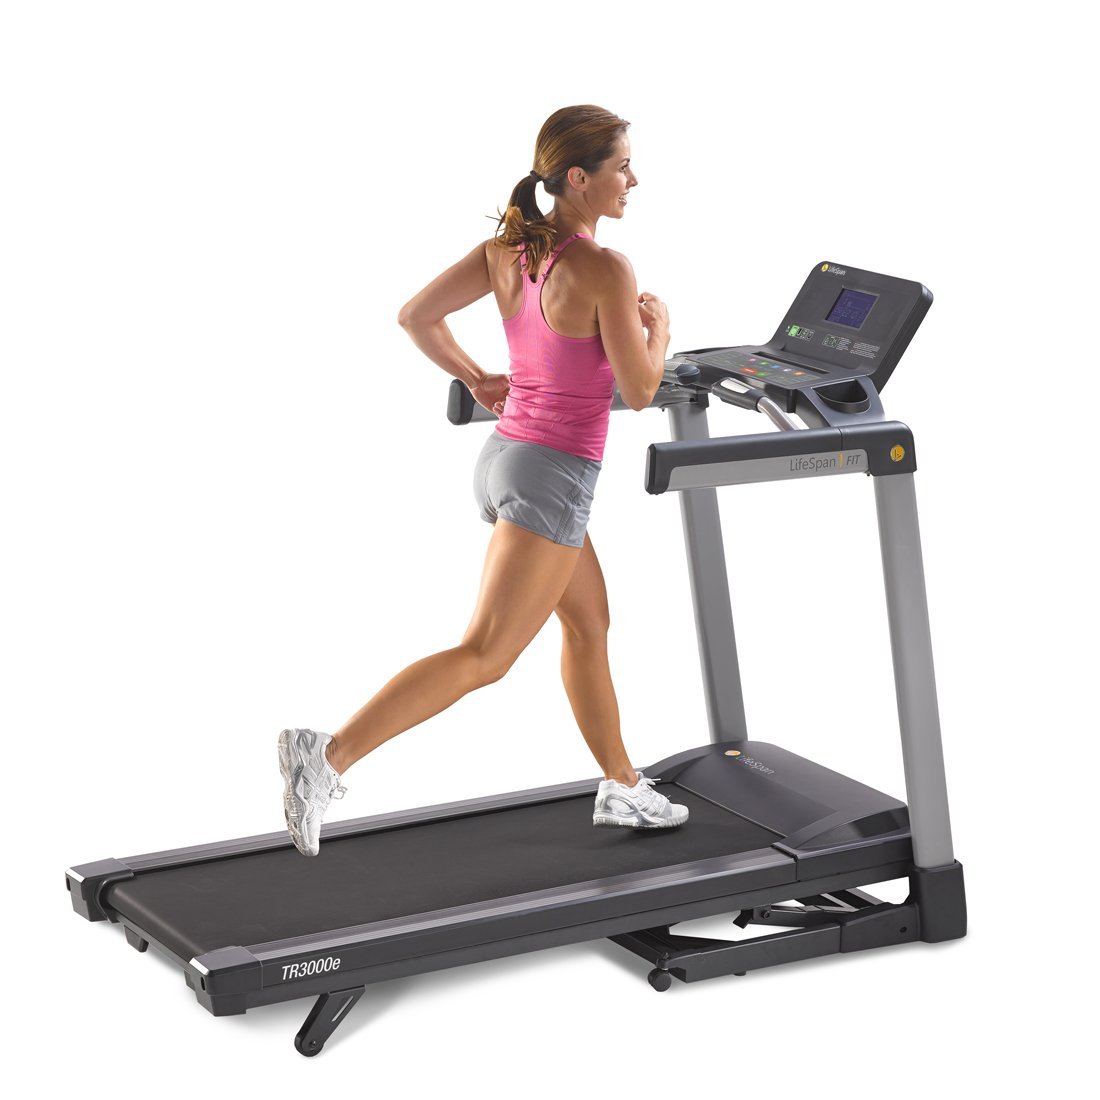 Lifespan TR3000 Treadmill